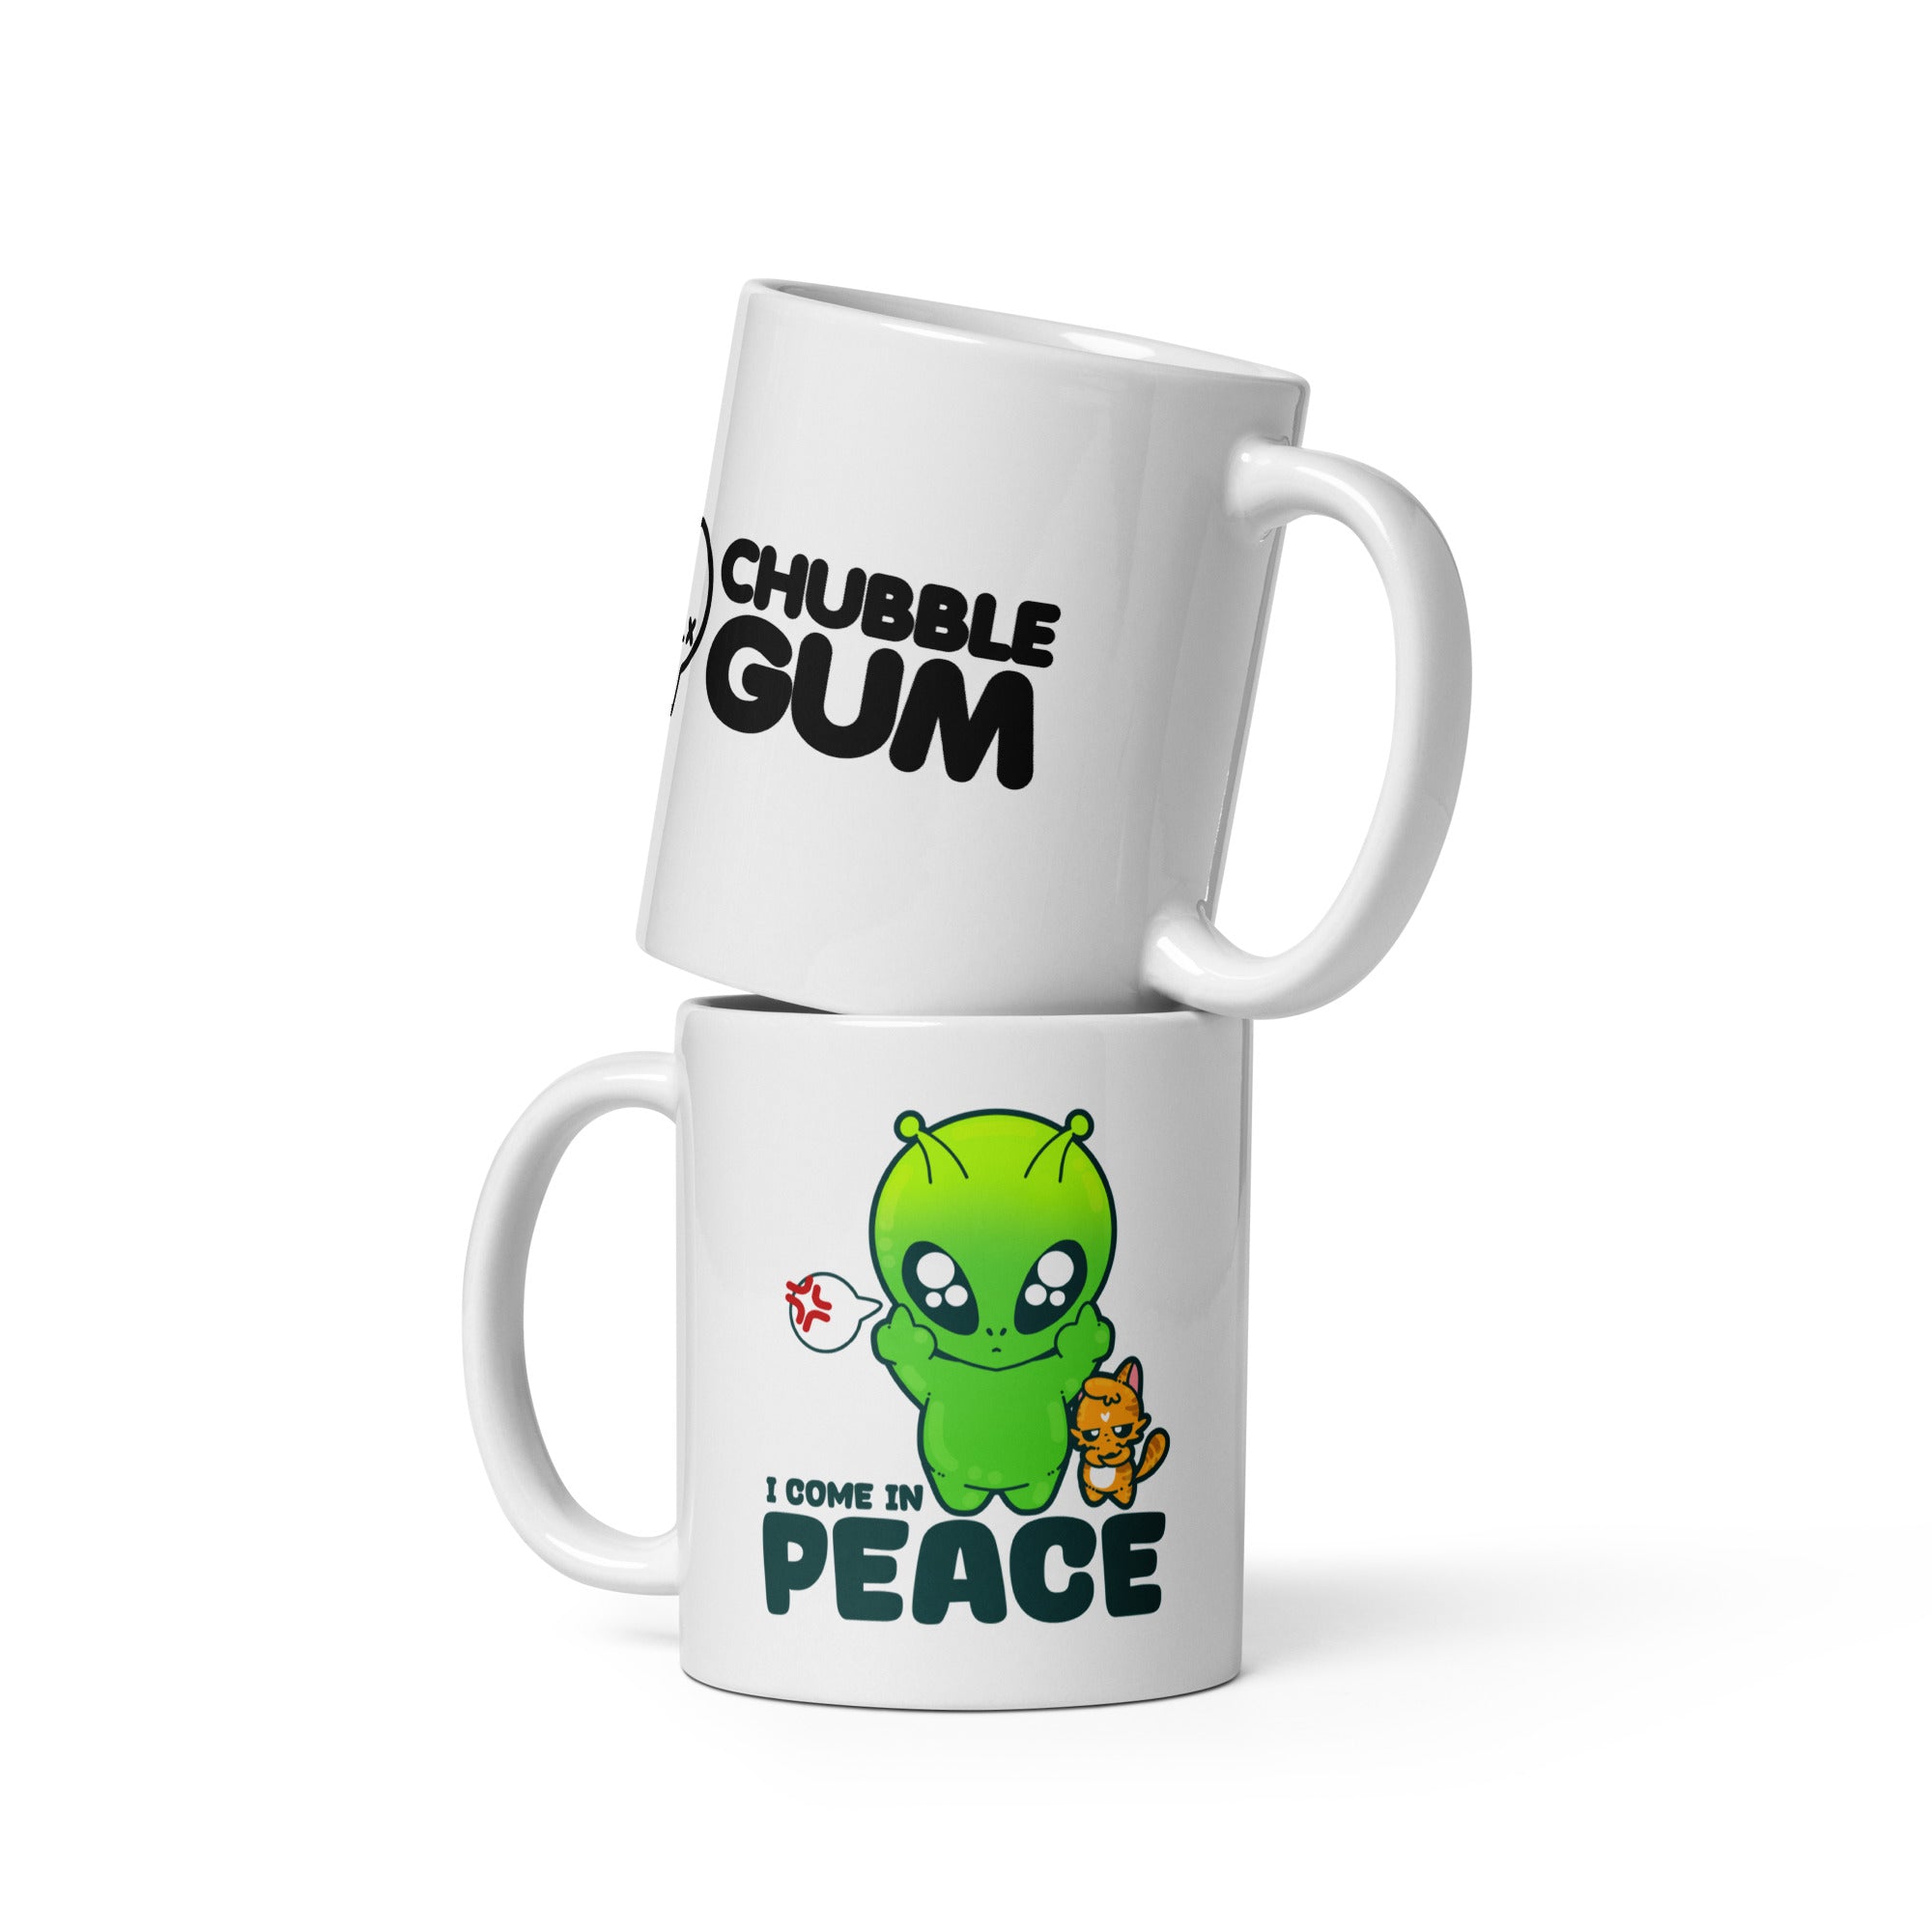 I COME IN PEACE - Coffee Mug - ChubbleGumLLC